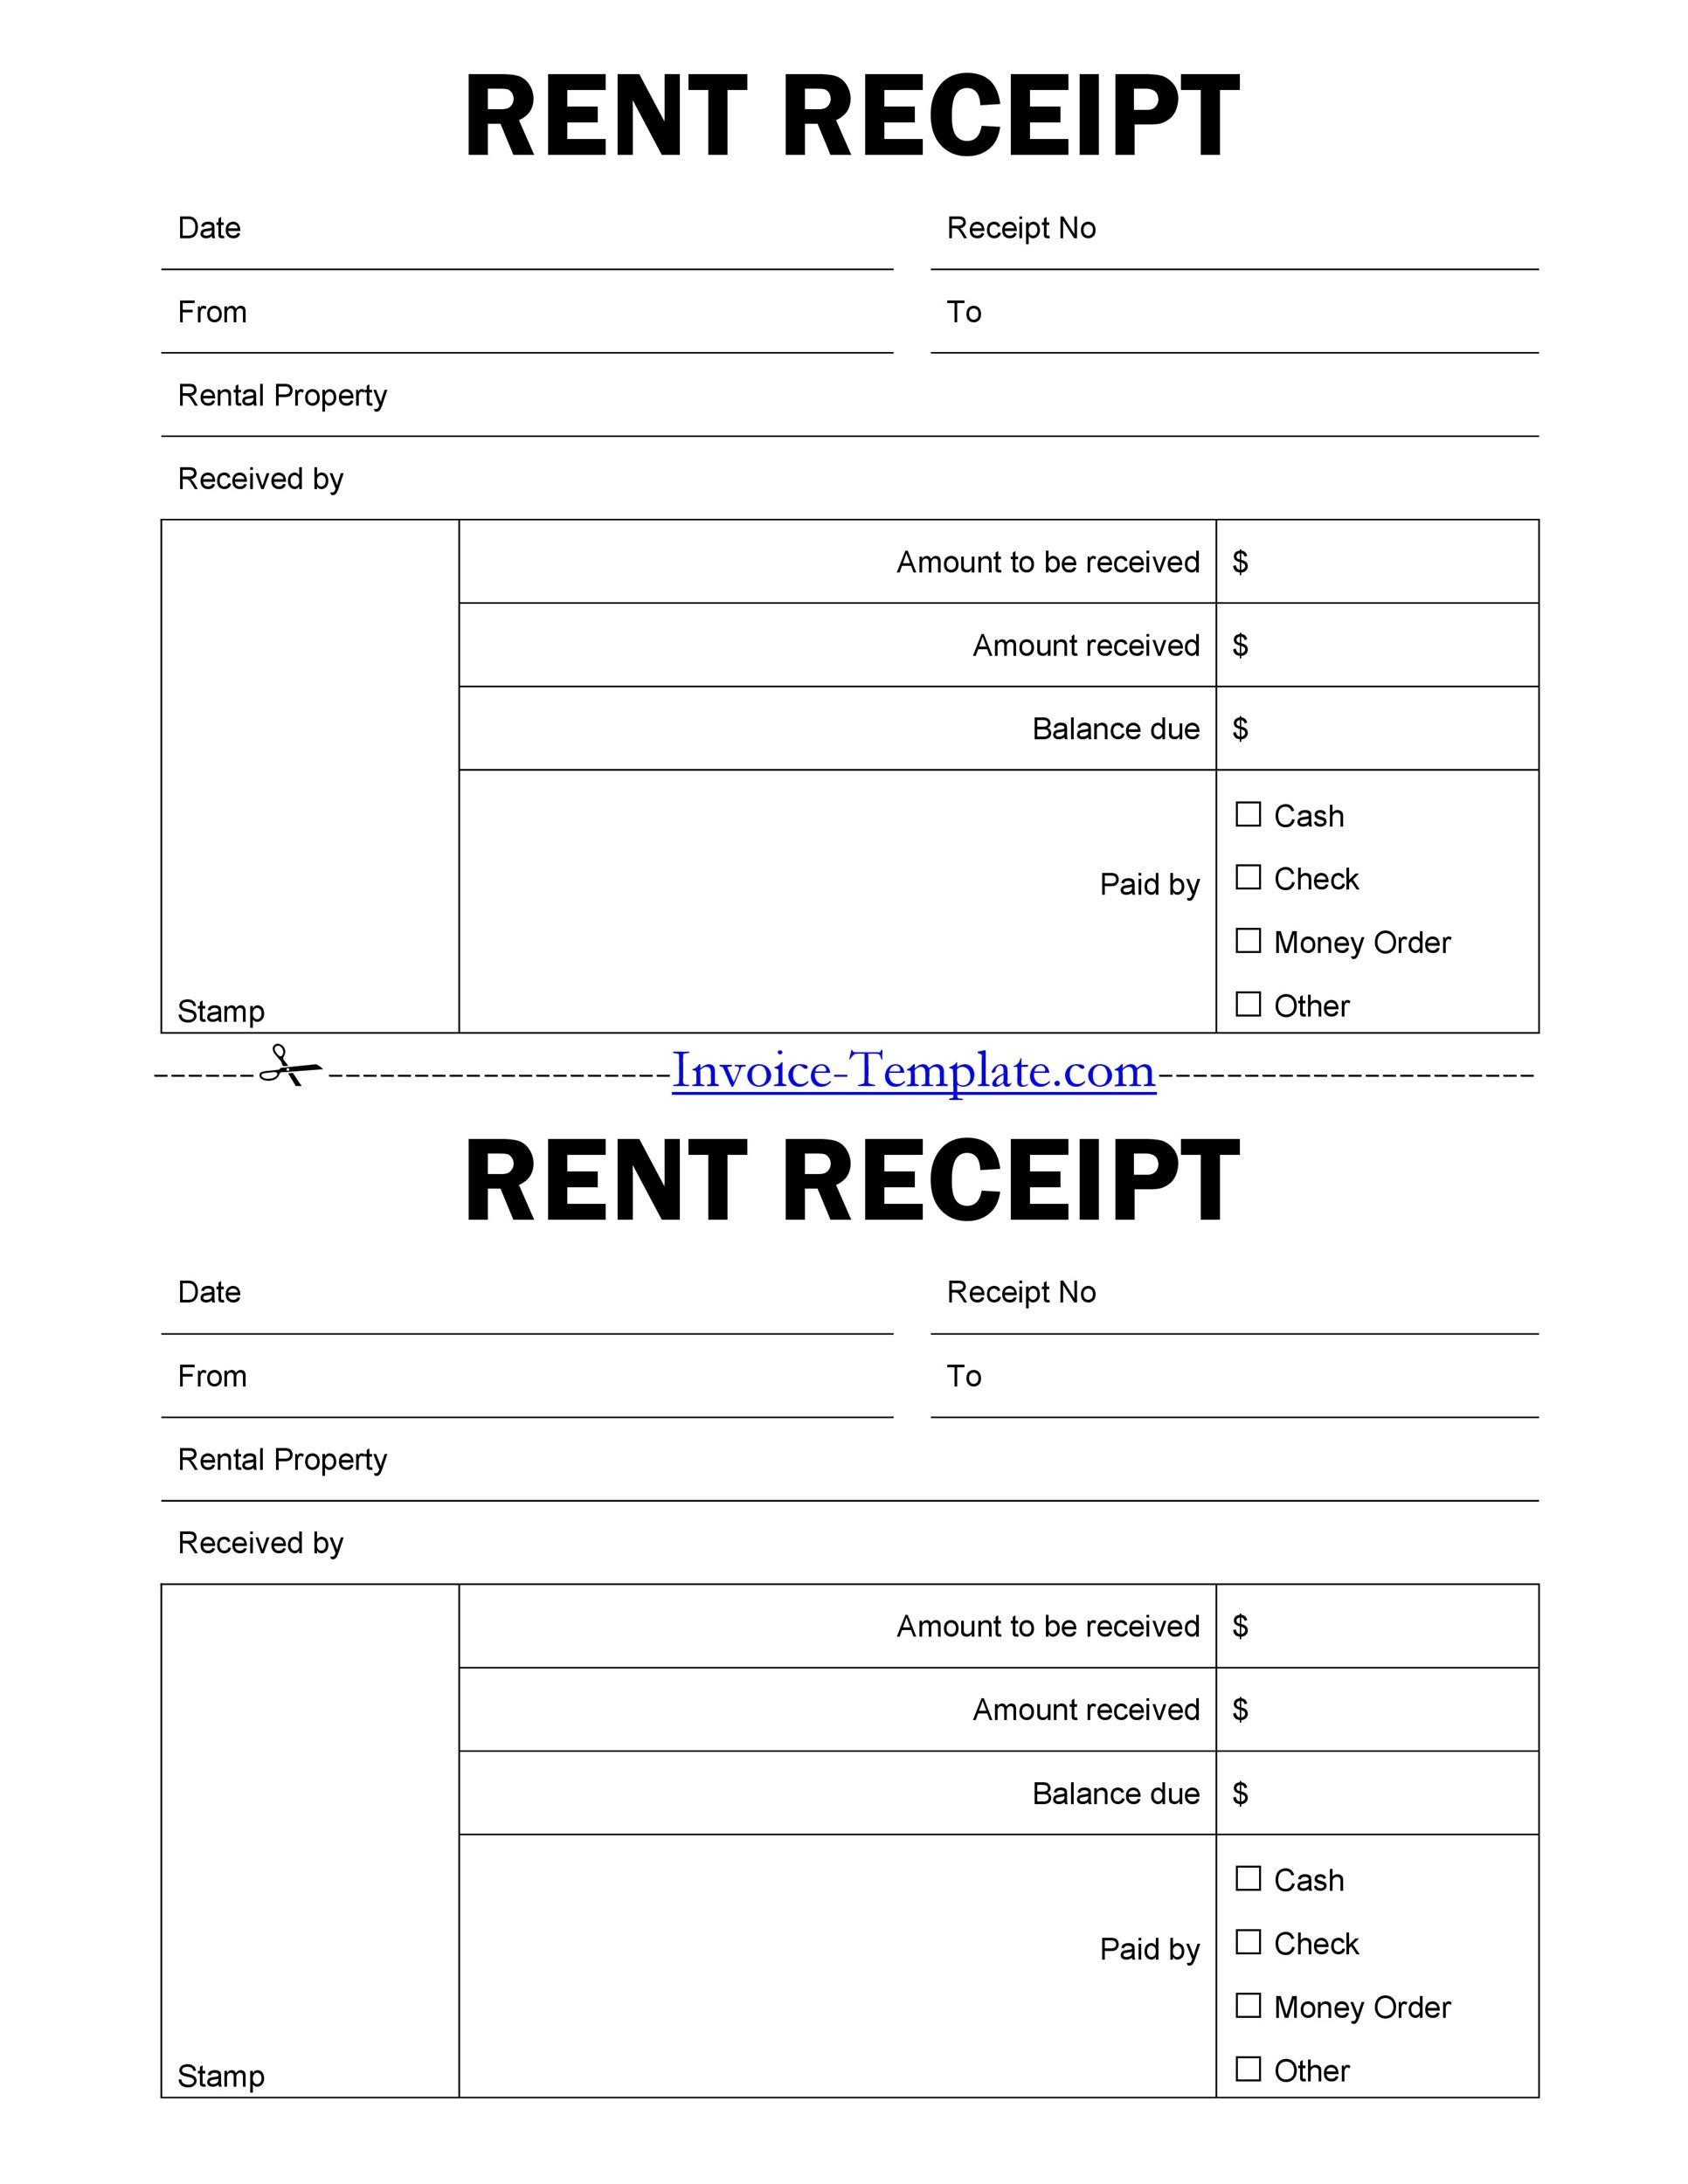 rent-receipt-sample-format-classles-democracy